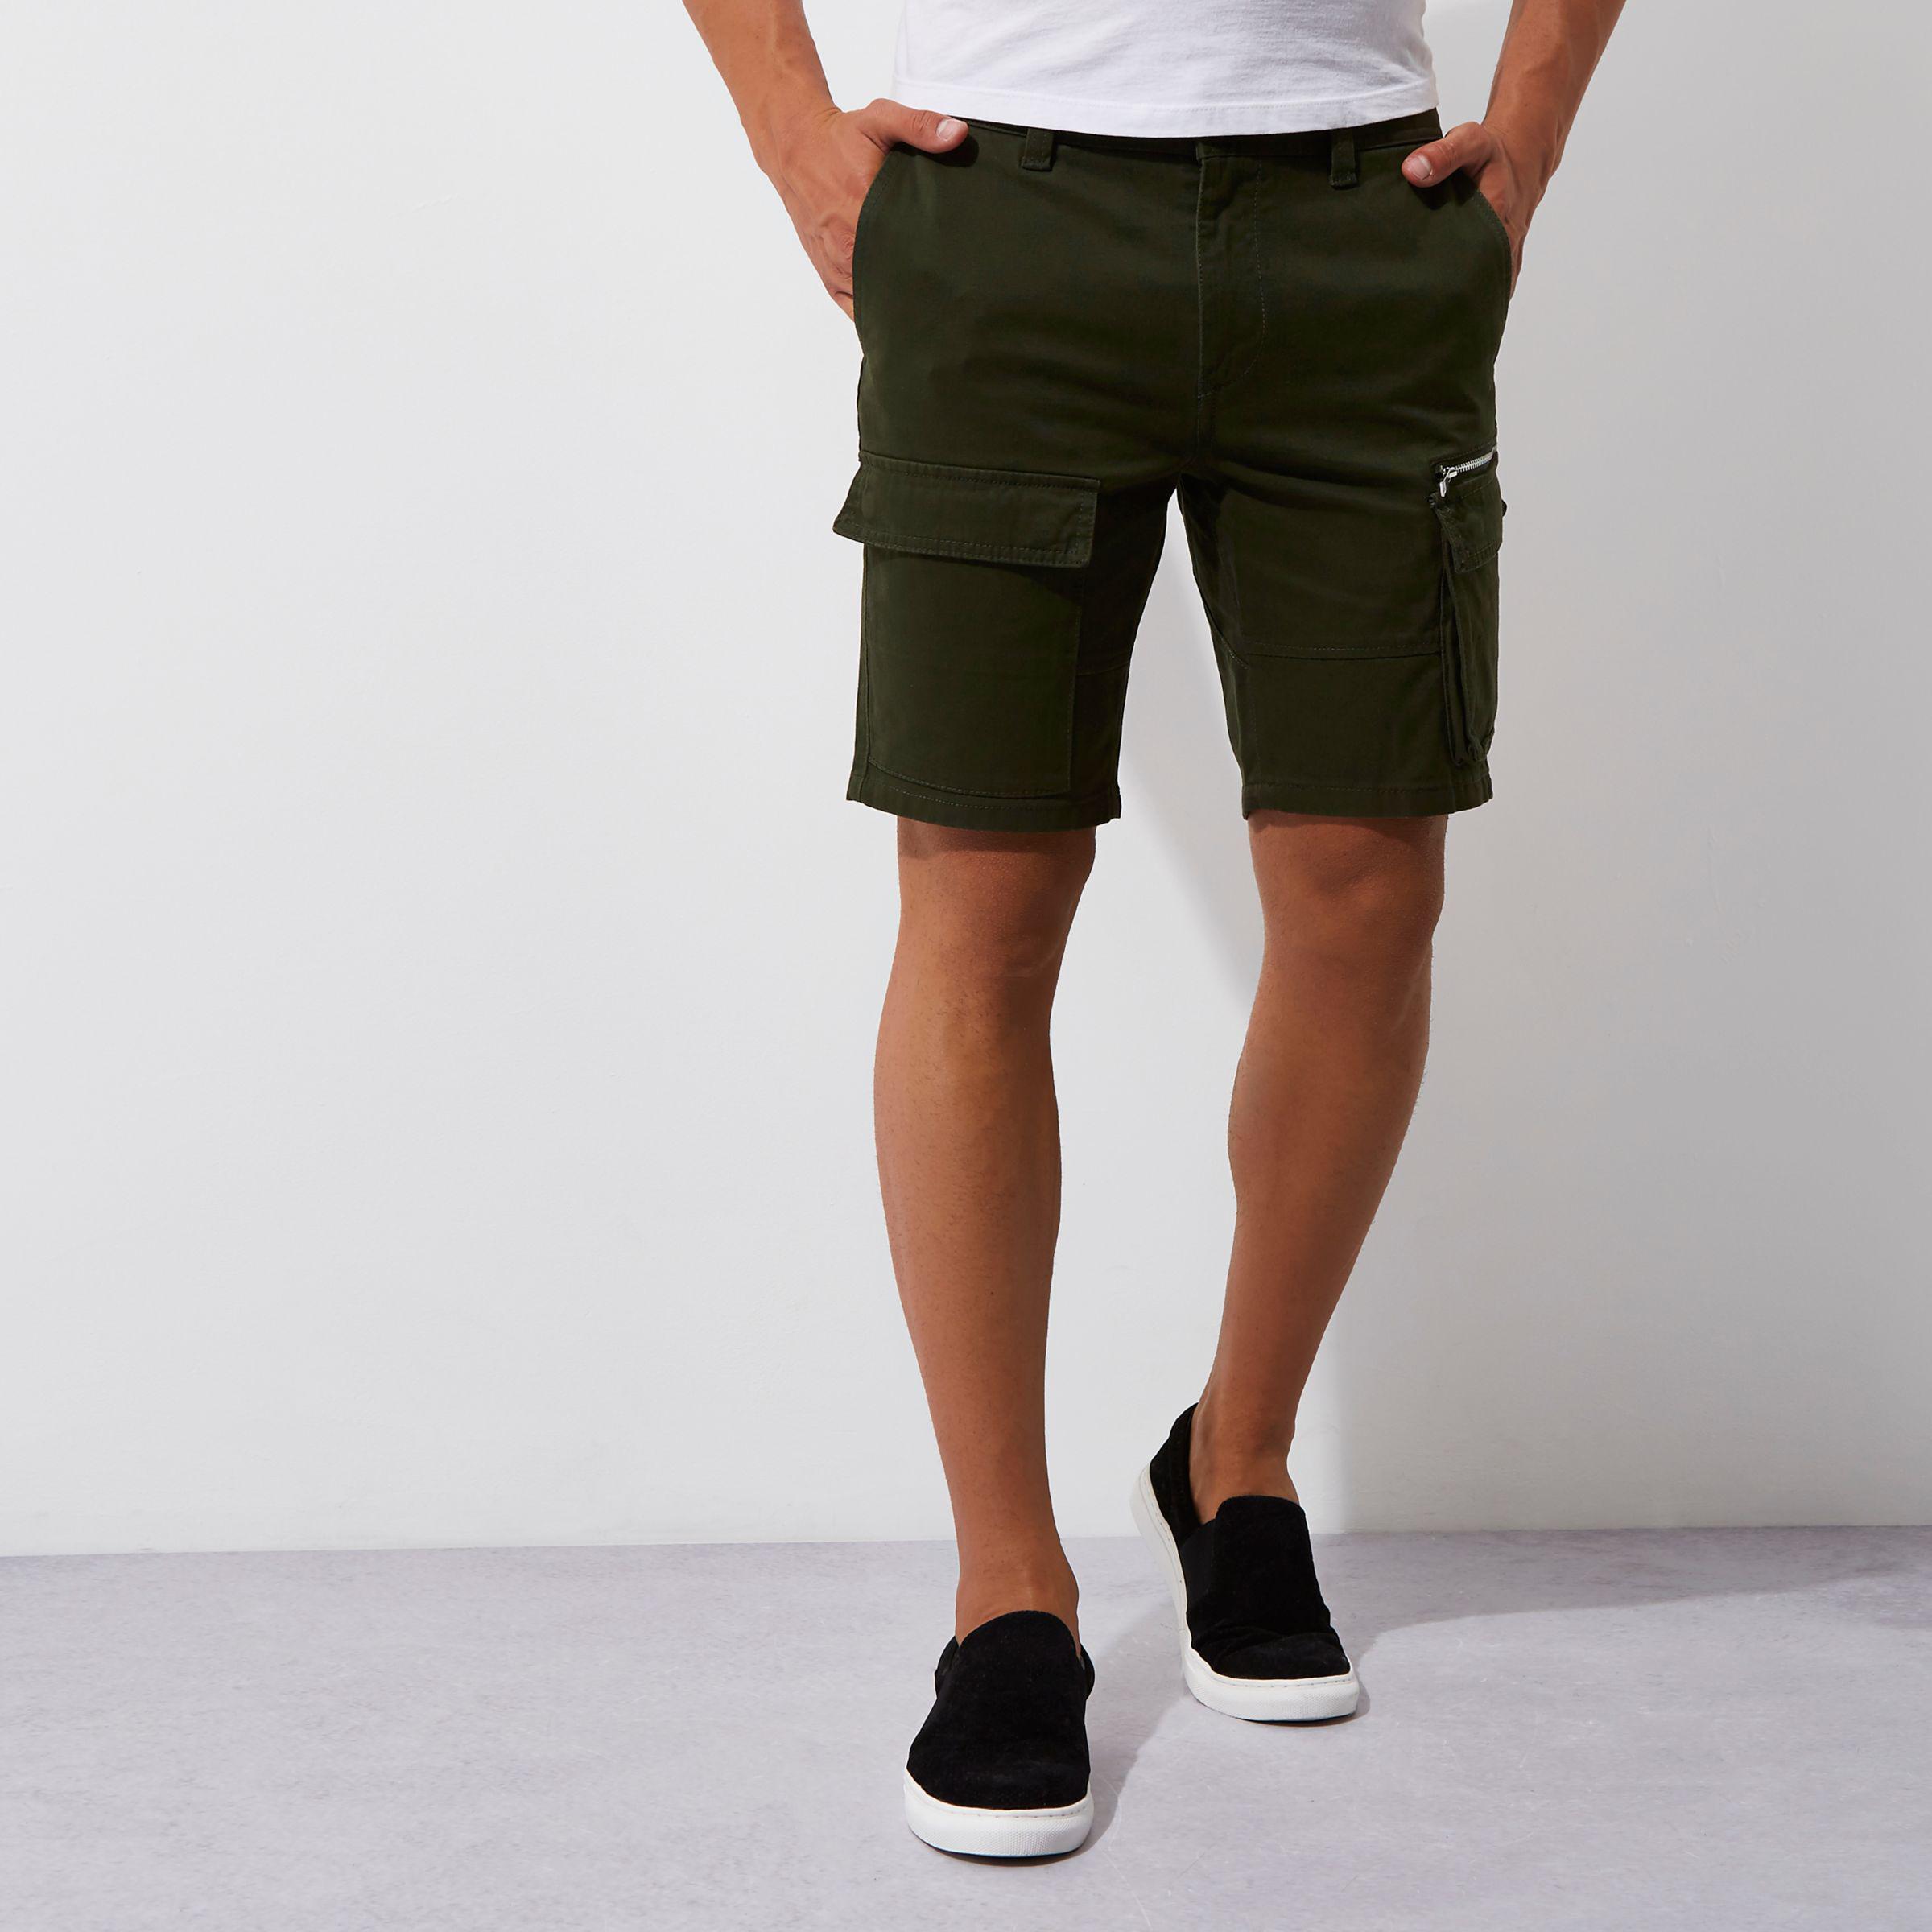 Lyst - River Island Khaki Green Skinny Cargo Shorts in Green for Men